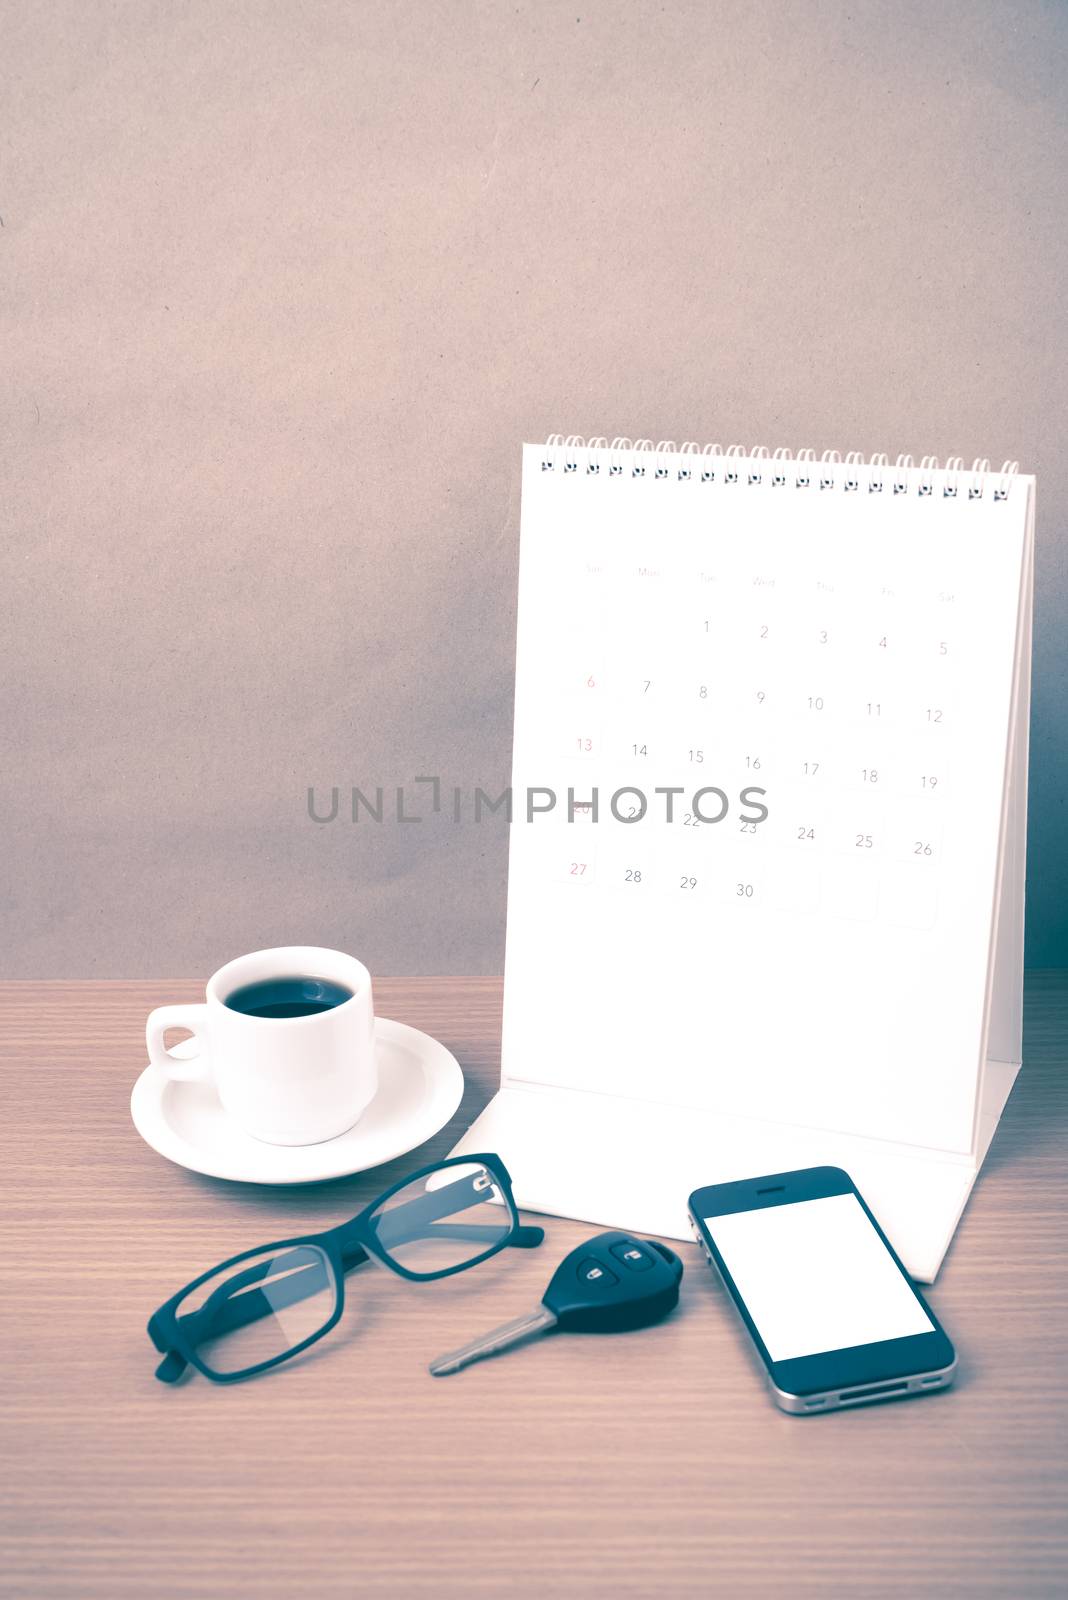 coffee,phone,car key,eyeglasses and calendar on wood table background vintage style